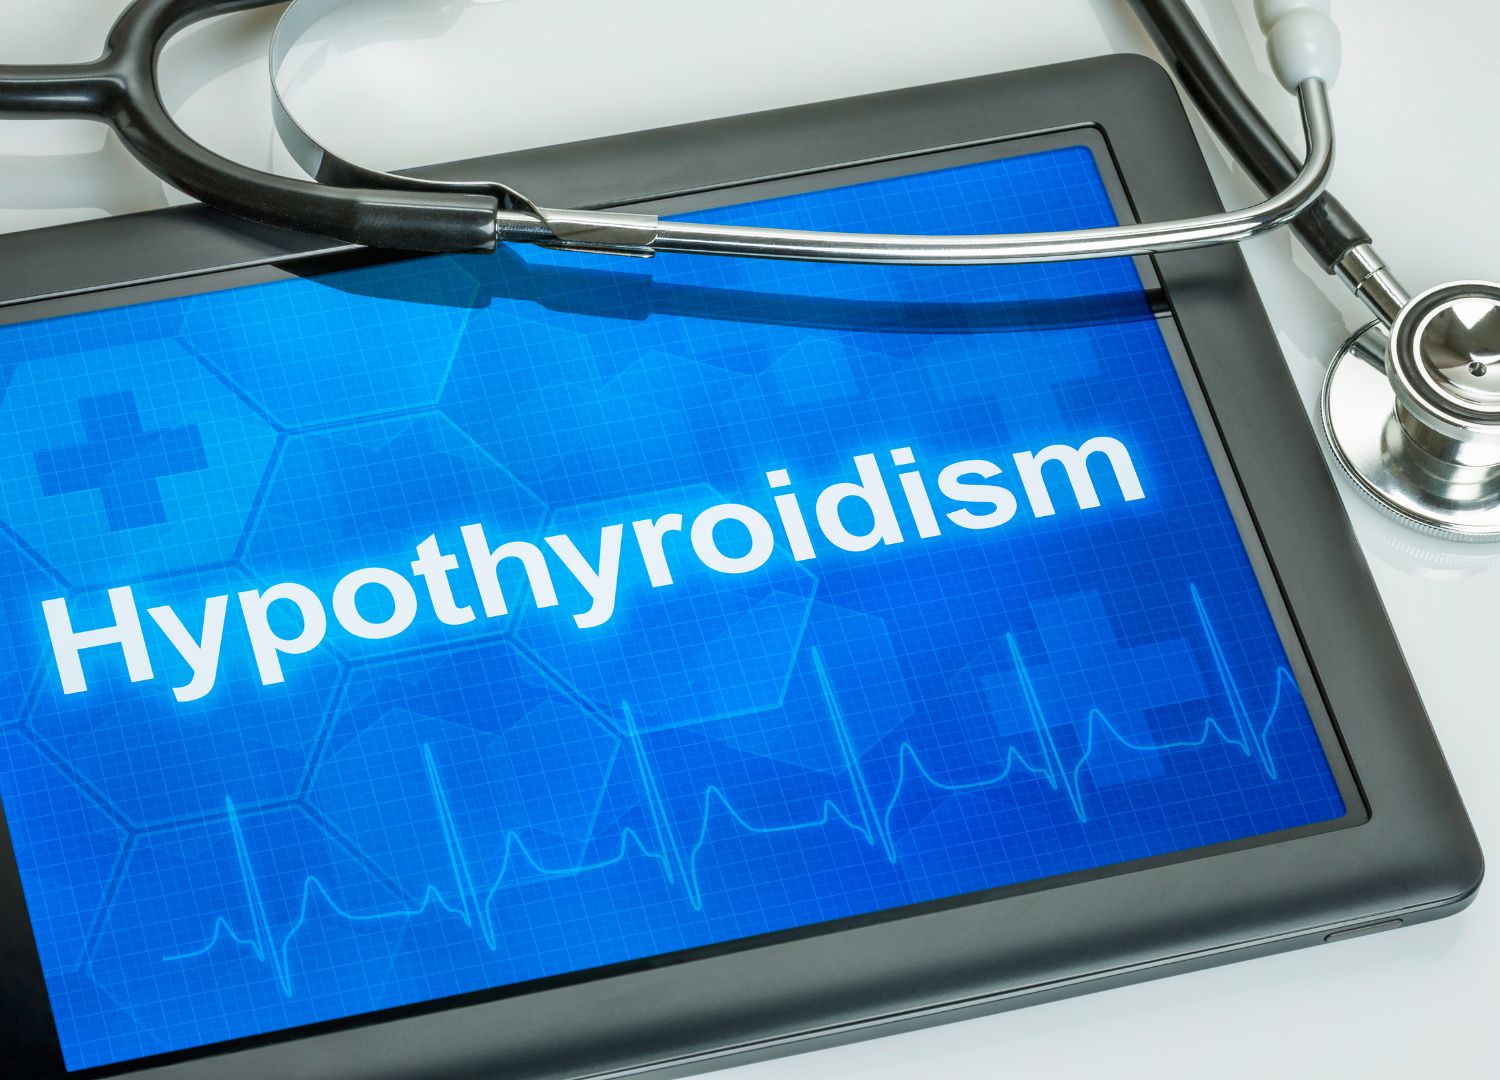 "Hypothyroidism: Underactive thyroid  function"